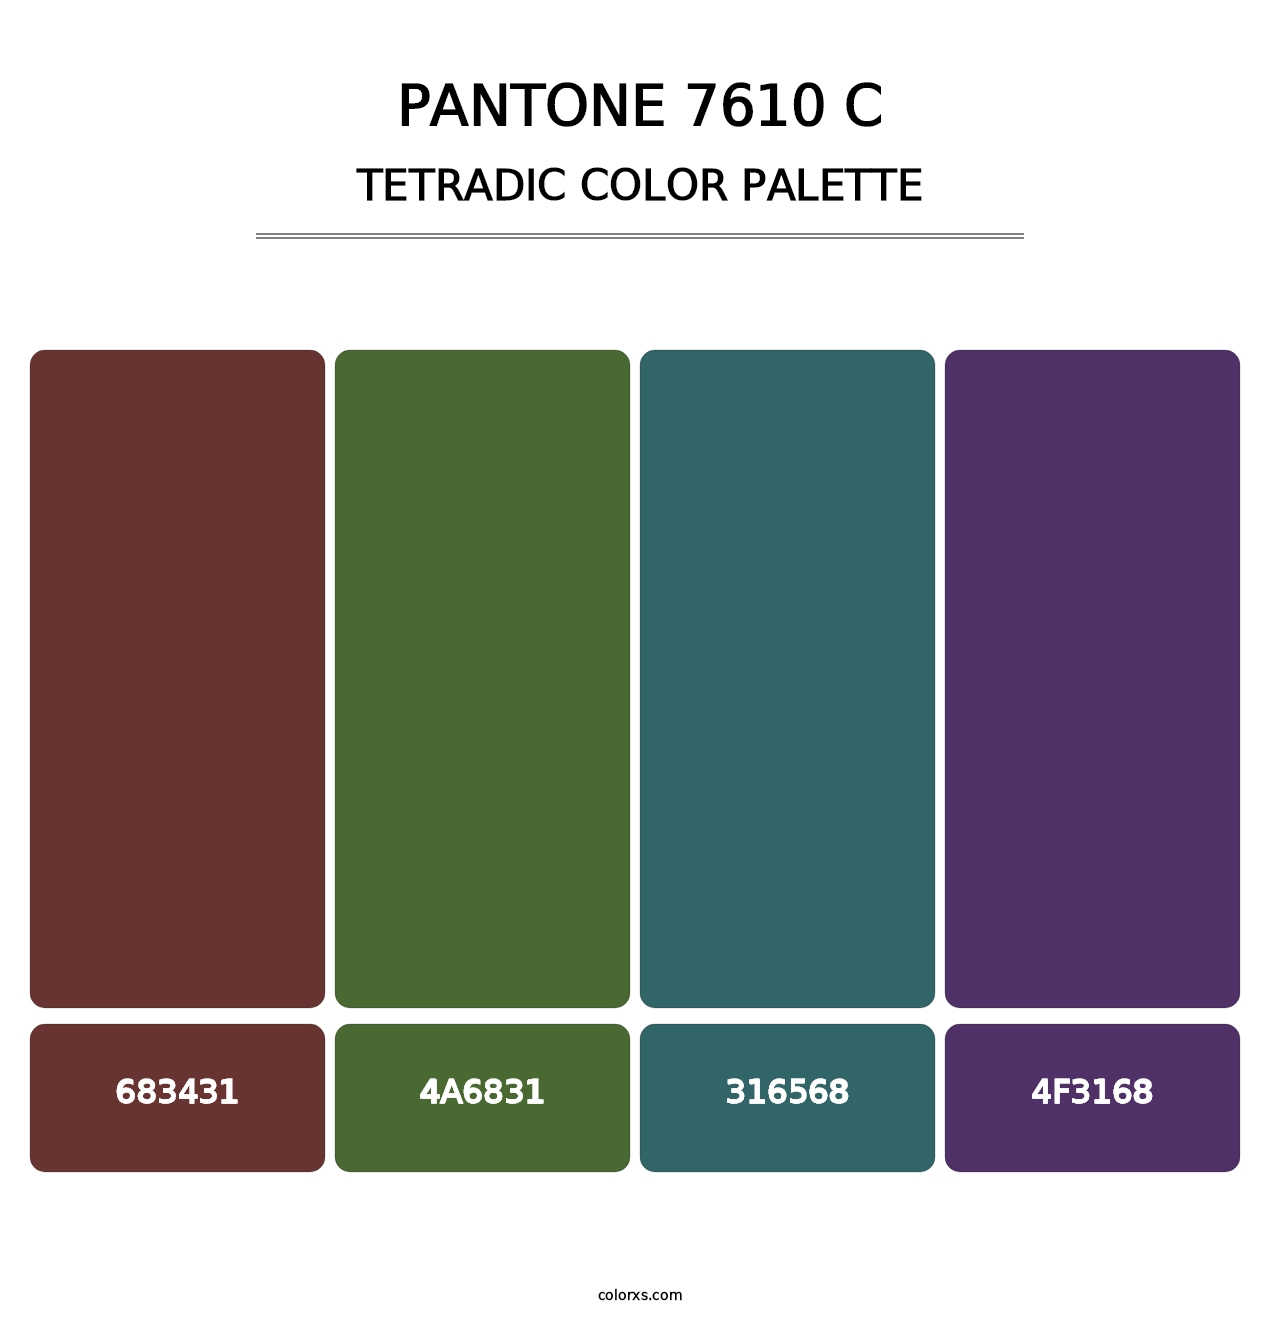 PANTONE 7610 C - Tetradic Color Palette